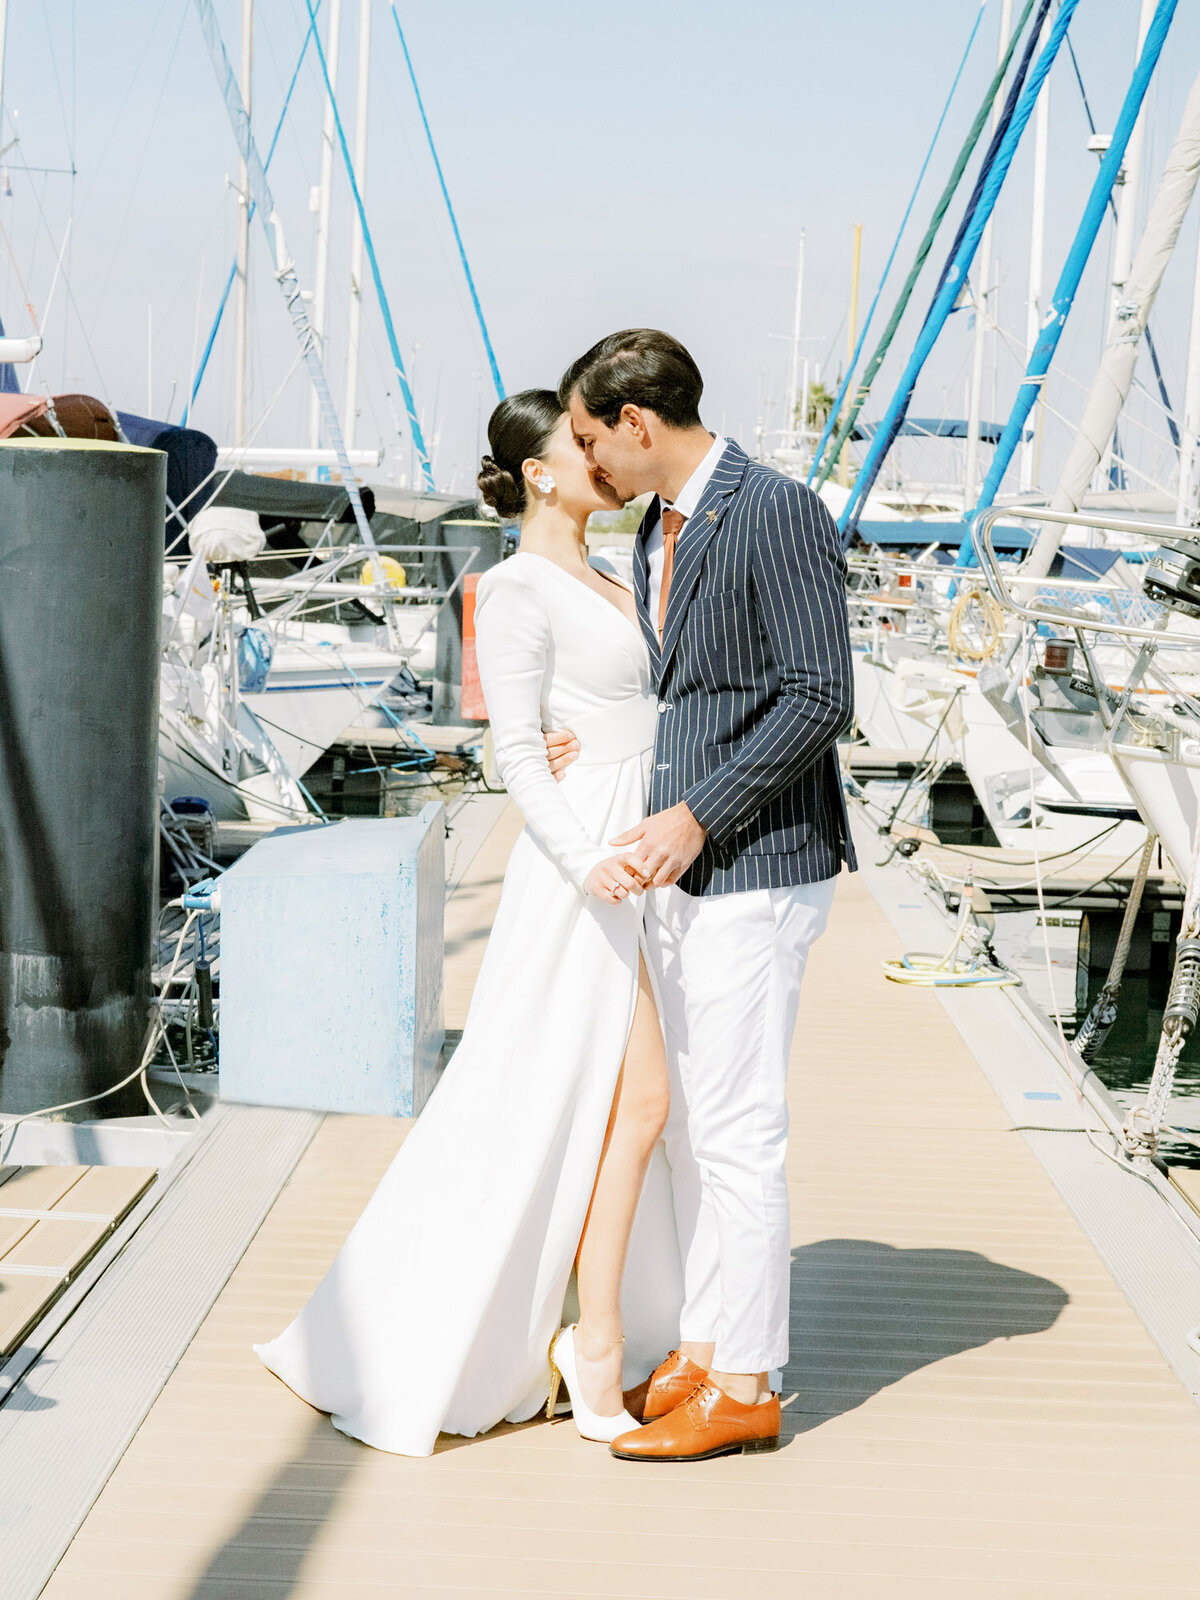 AndreasKGeorgiou-sailing-boat-wedding-56